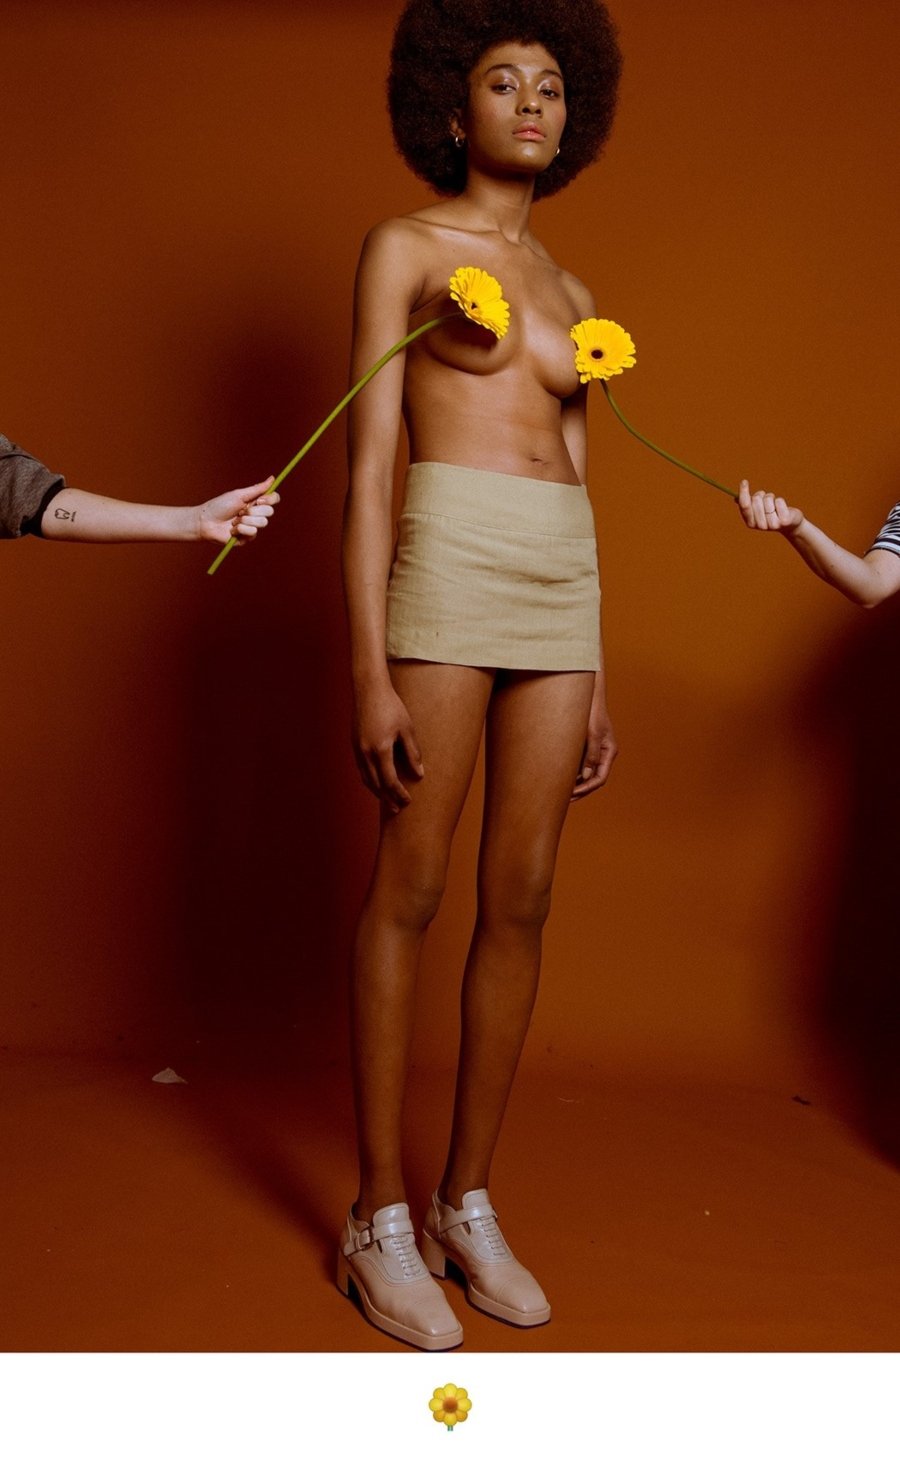 Modelo posando con girasoles para la serie "EMOJI"